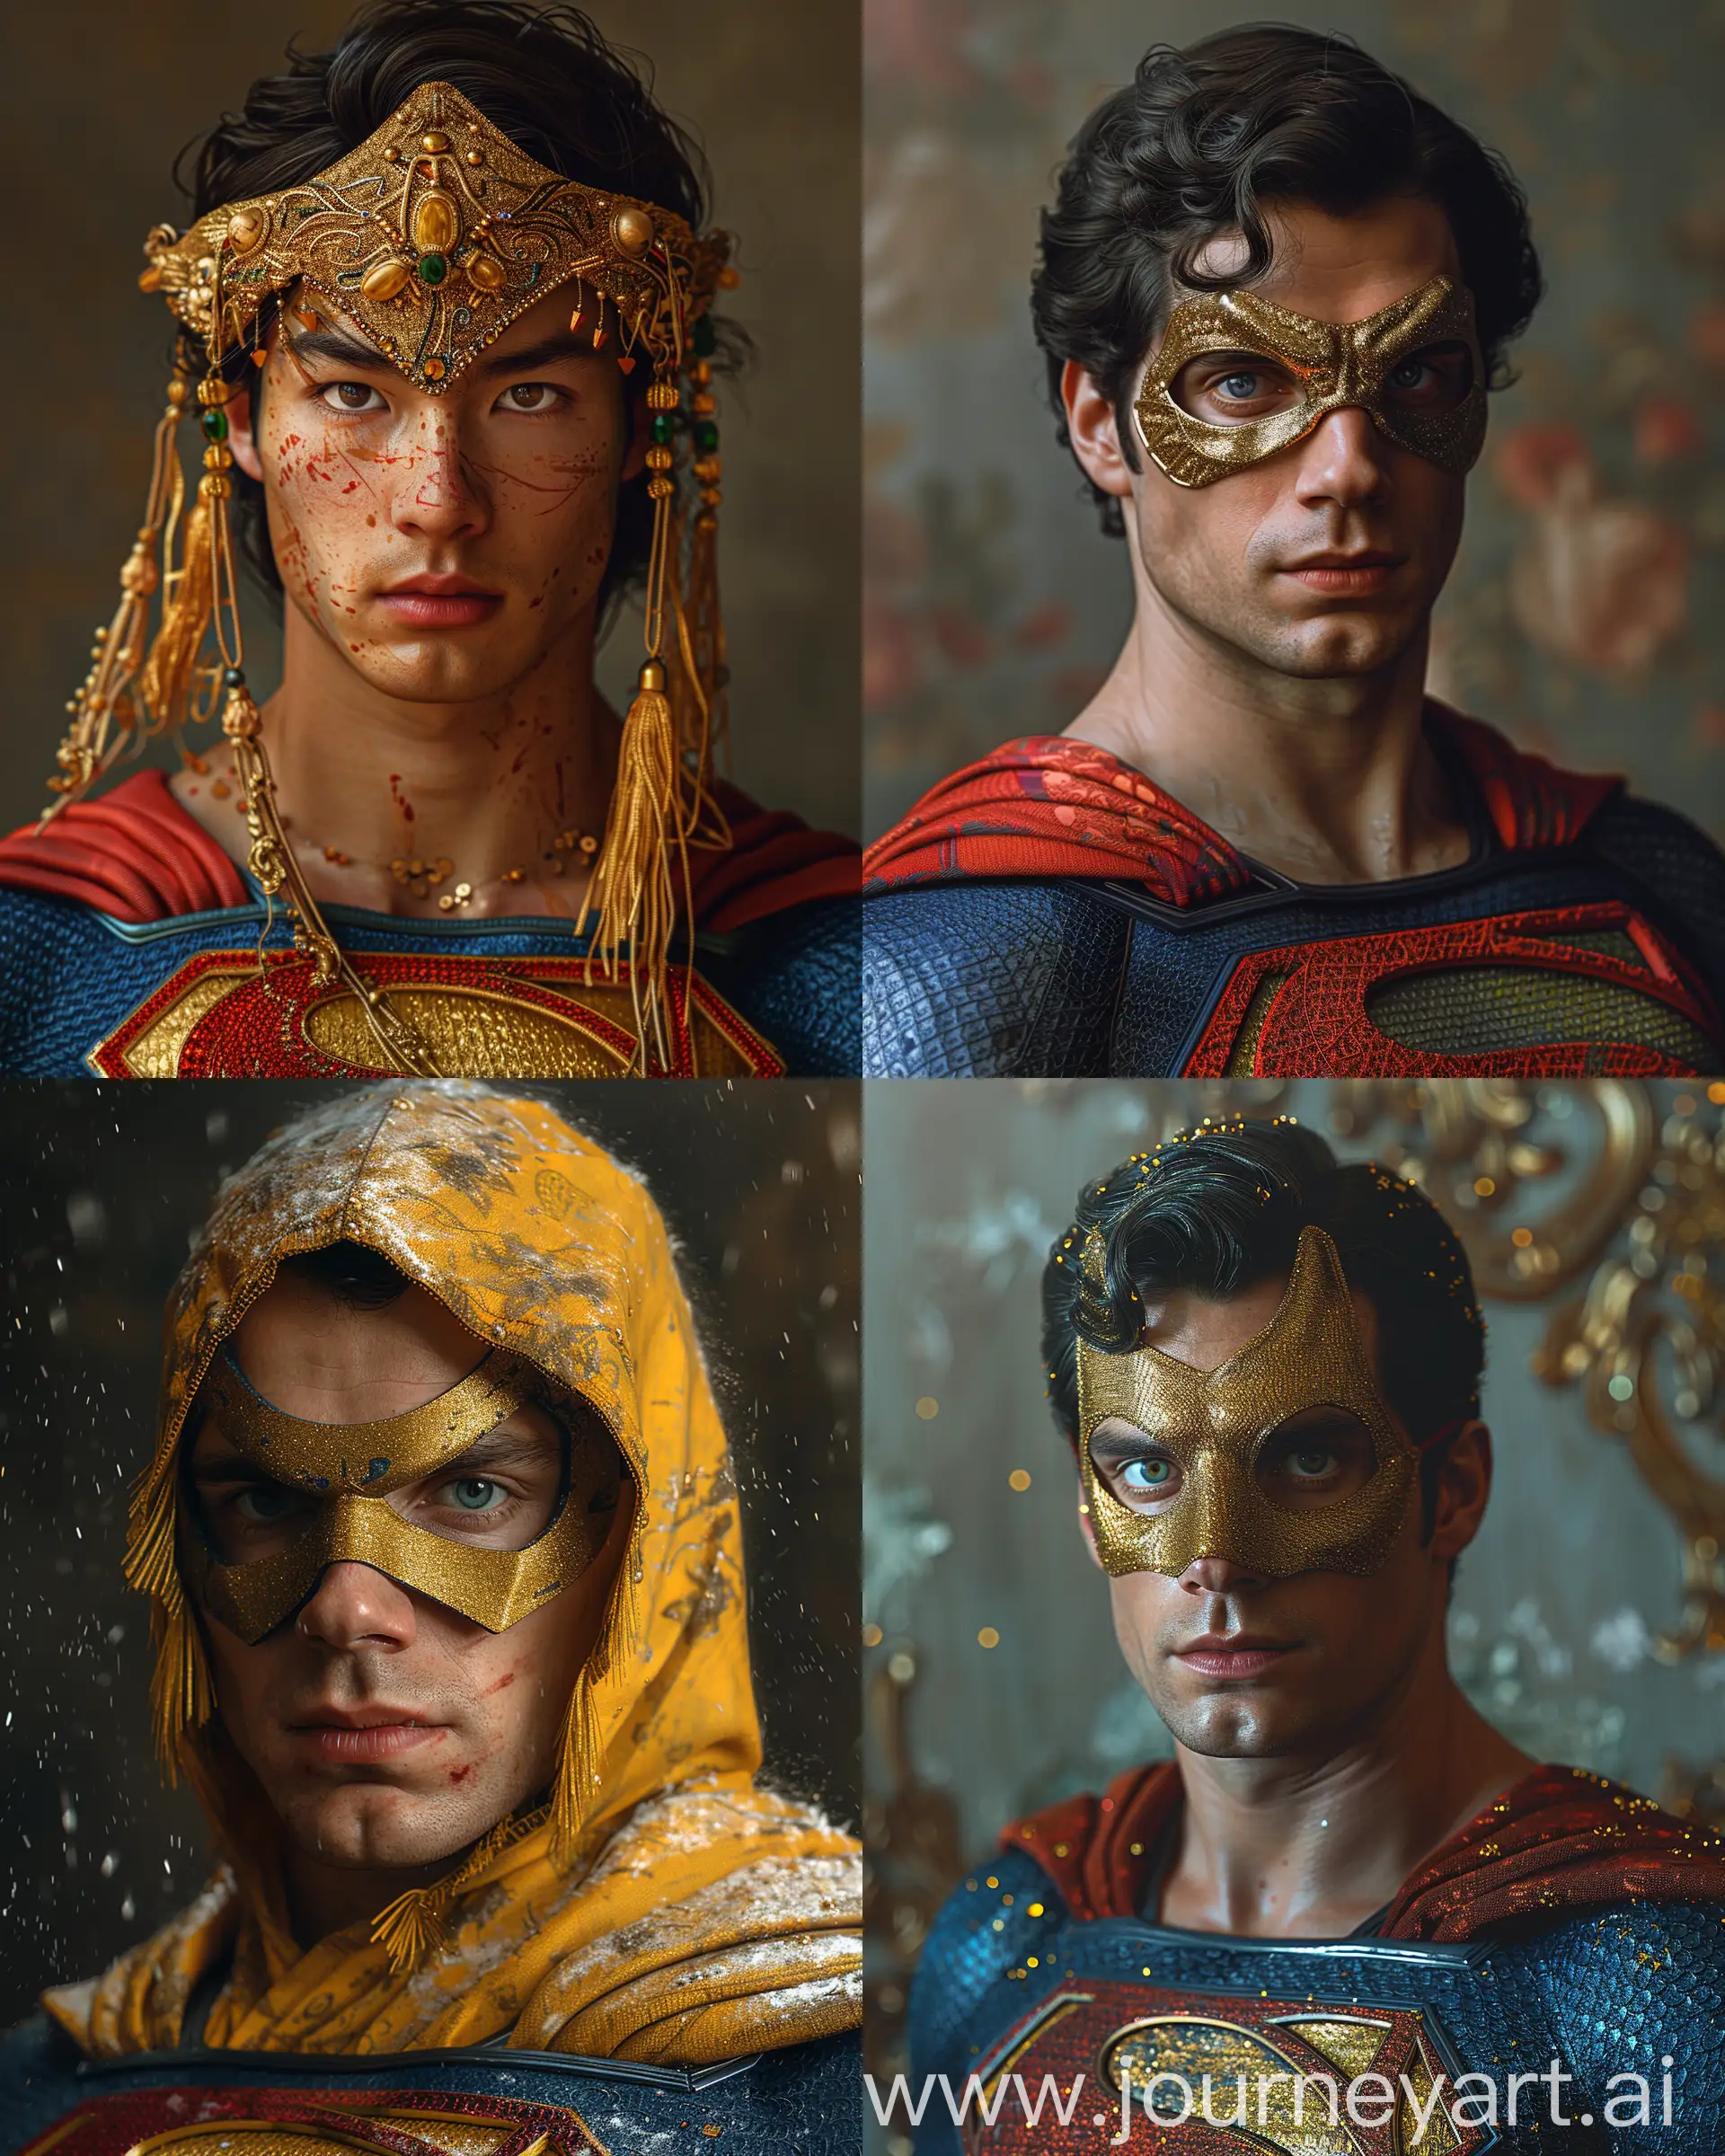 Superman-Wearing-Vibrant-National-Style-Bat-Nuo-Mask-Portrait